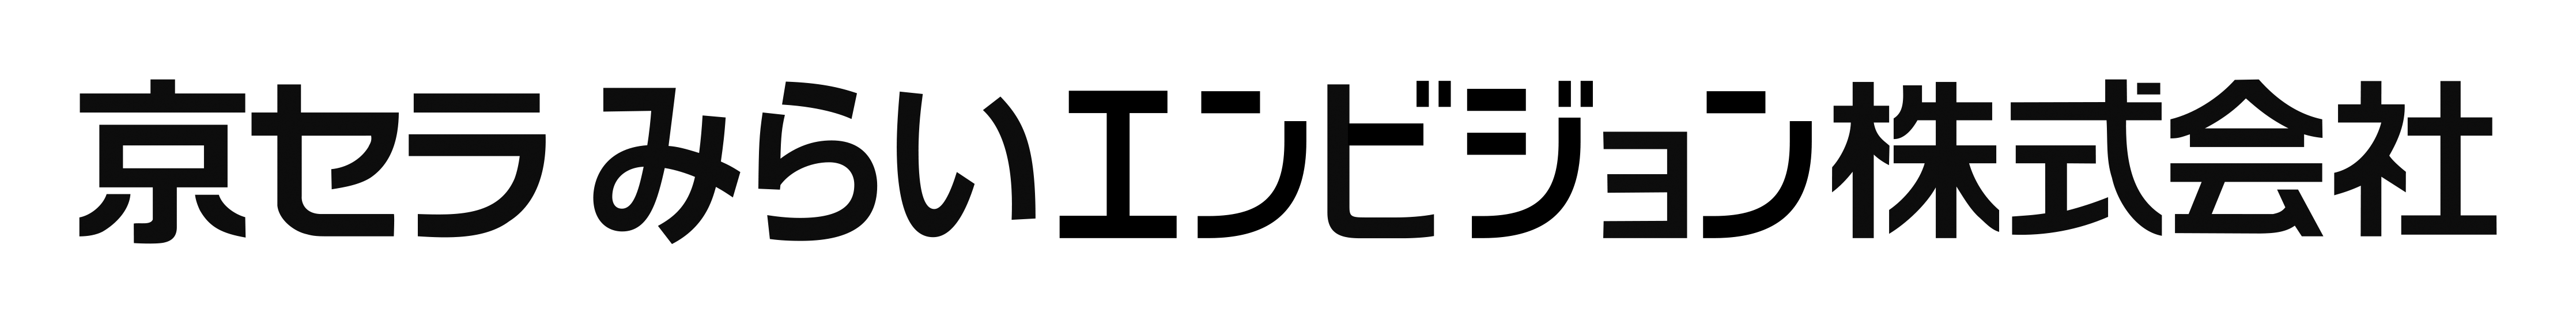 kcme-logo